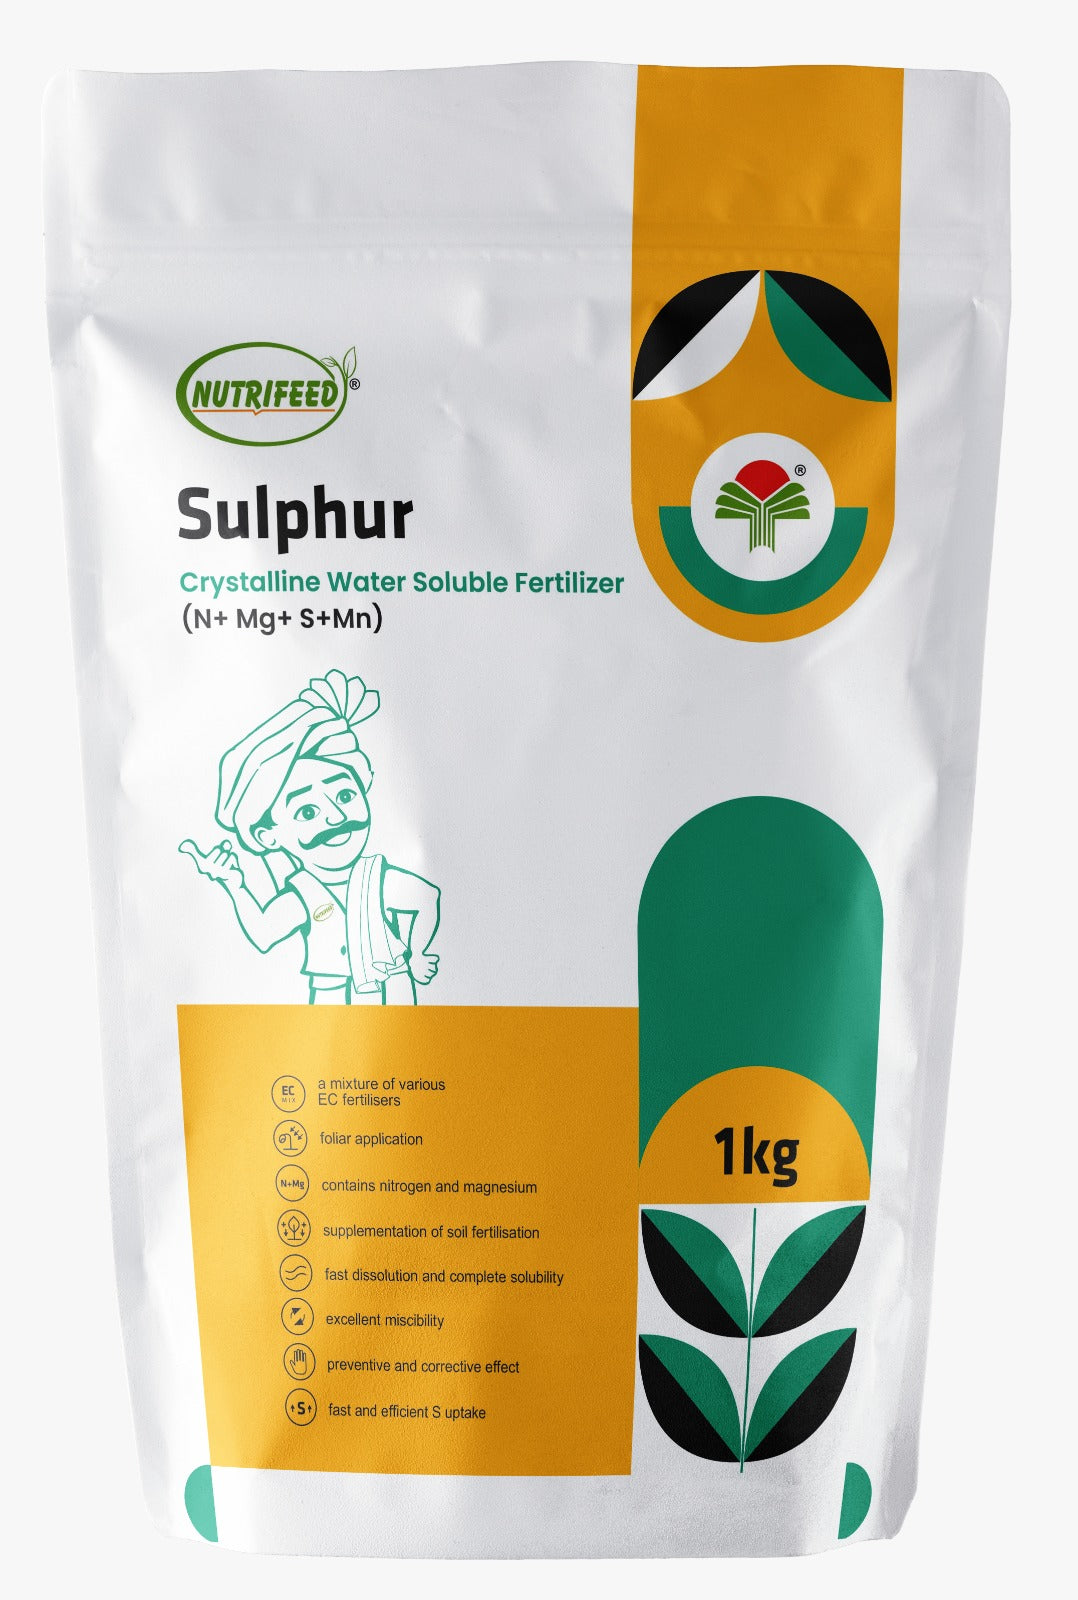 NUTRIFEED SULPHUR product  Image